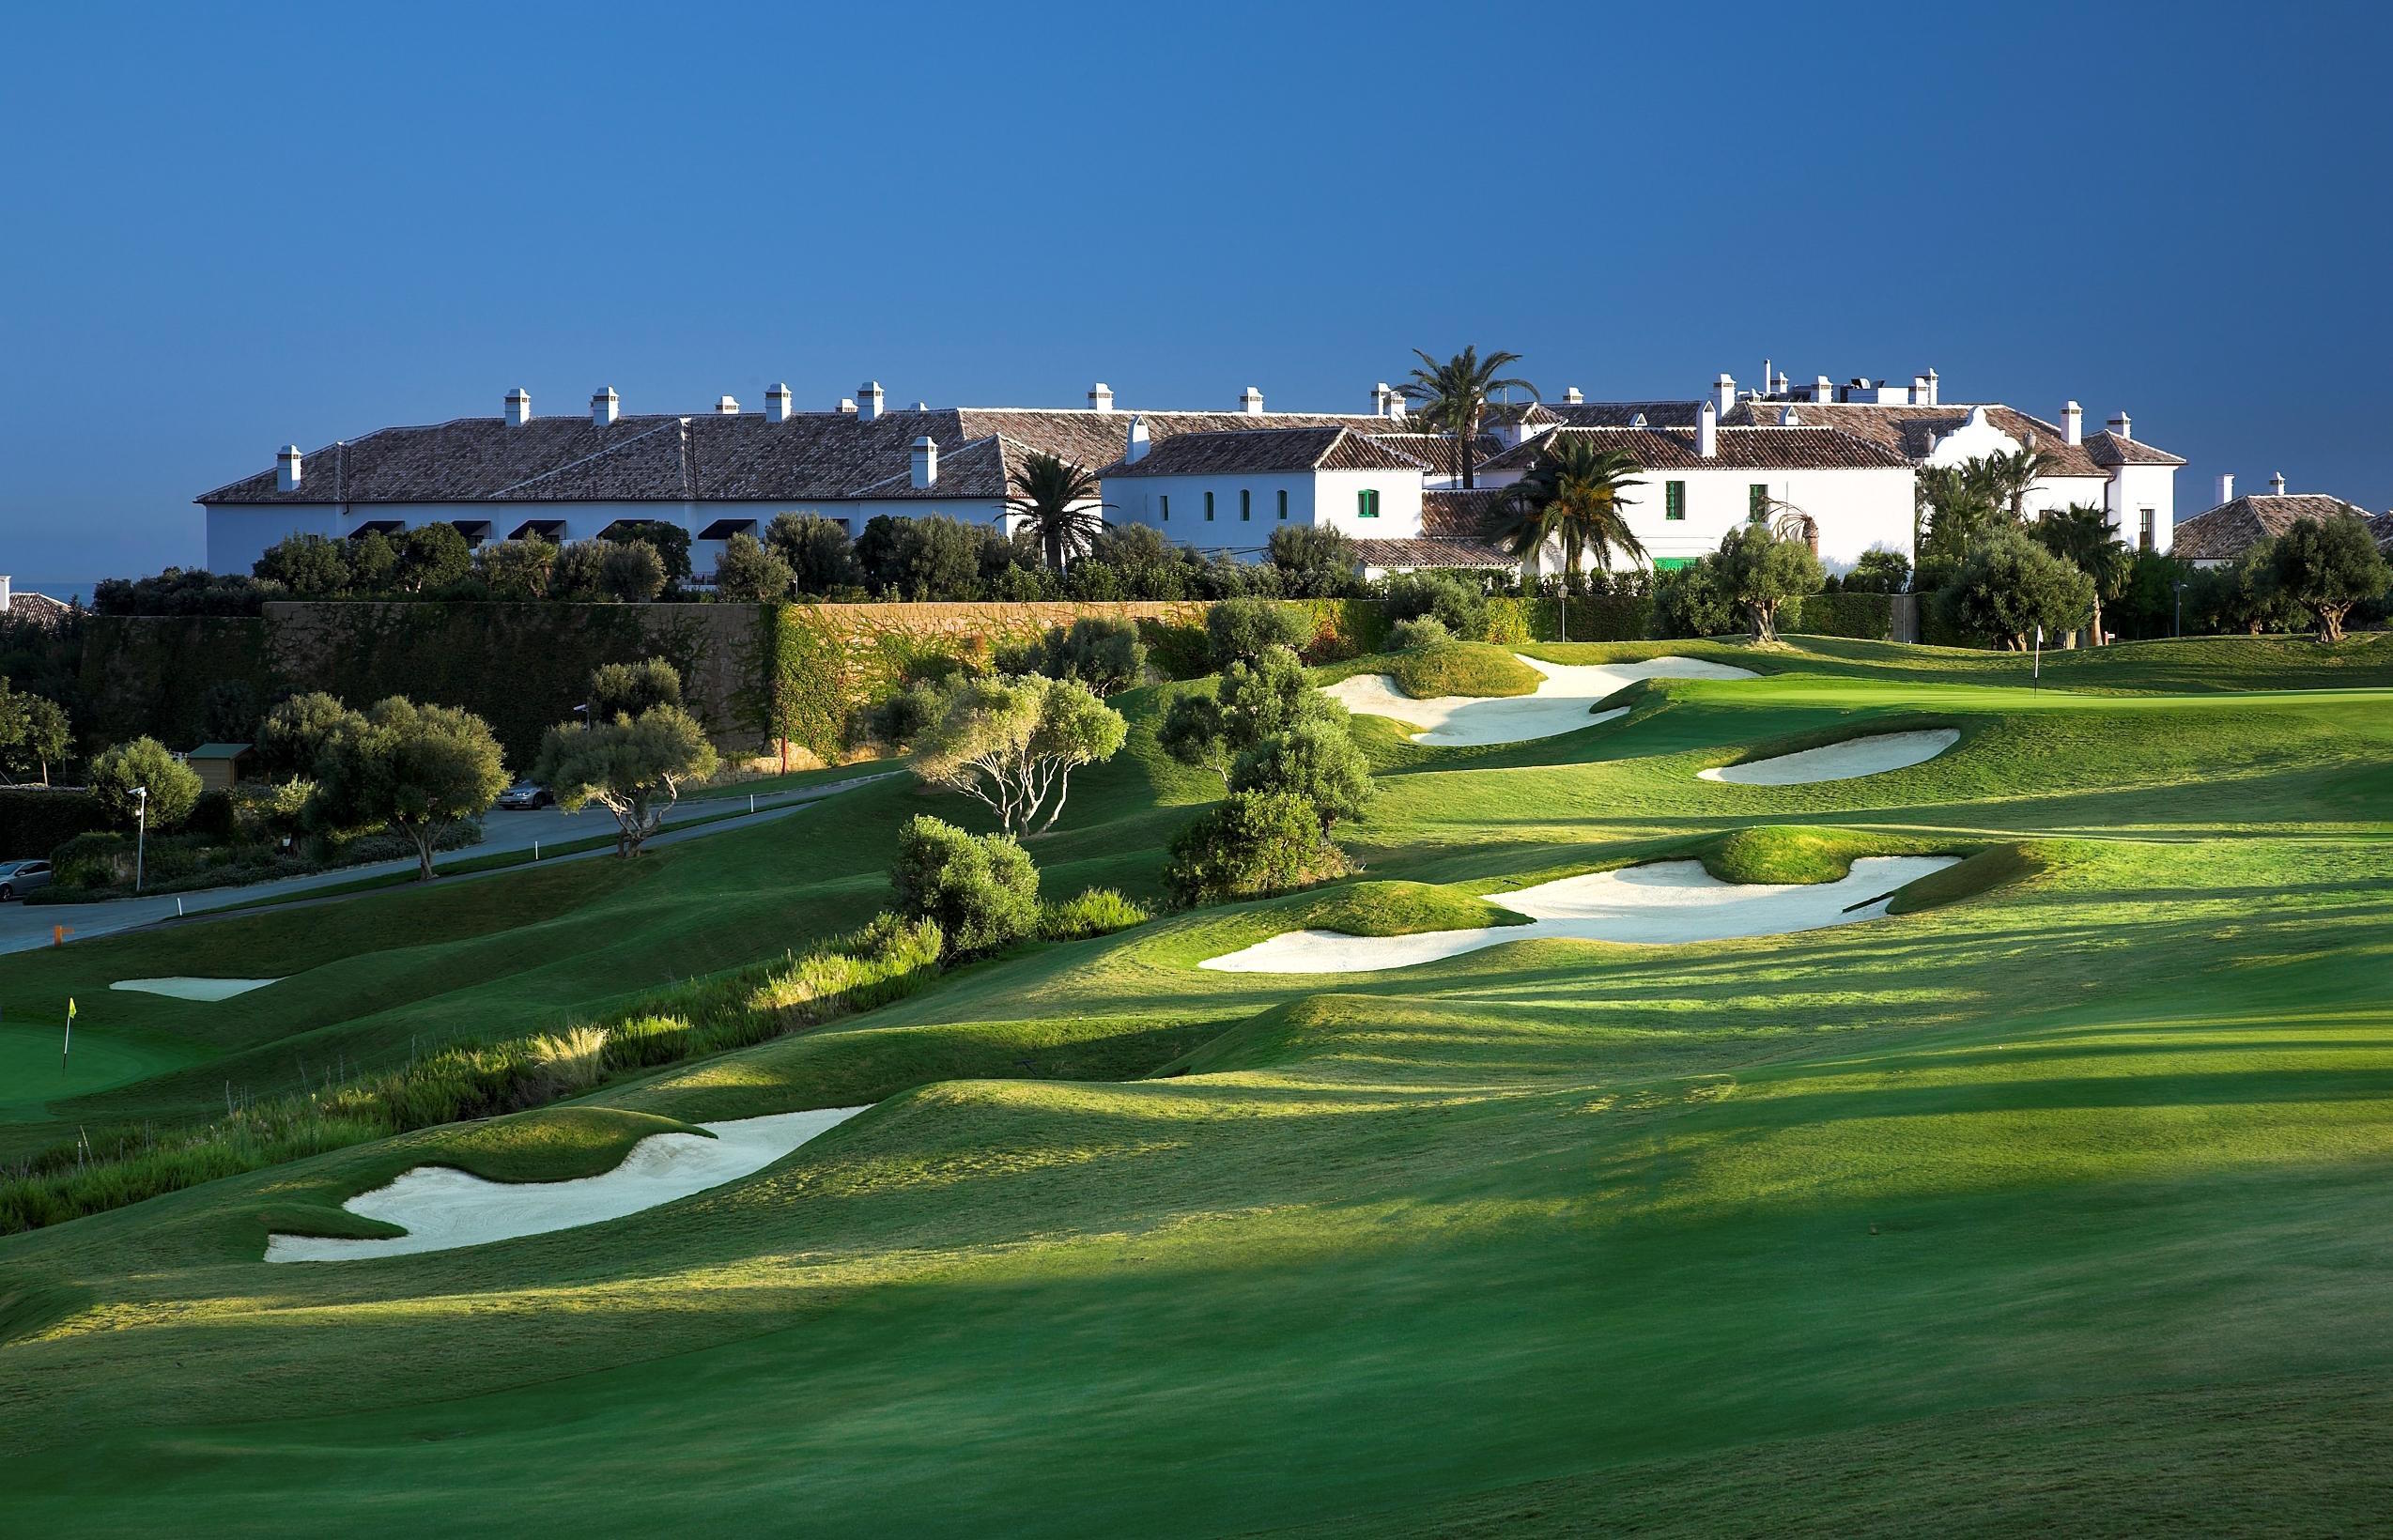 Real Club Valderrama wins best GC in Spain - GolfPunkHQ